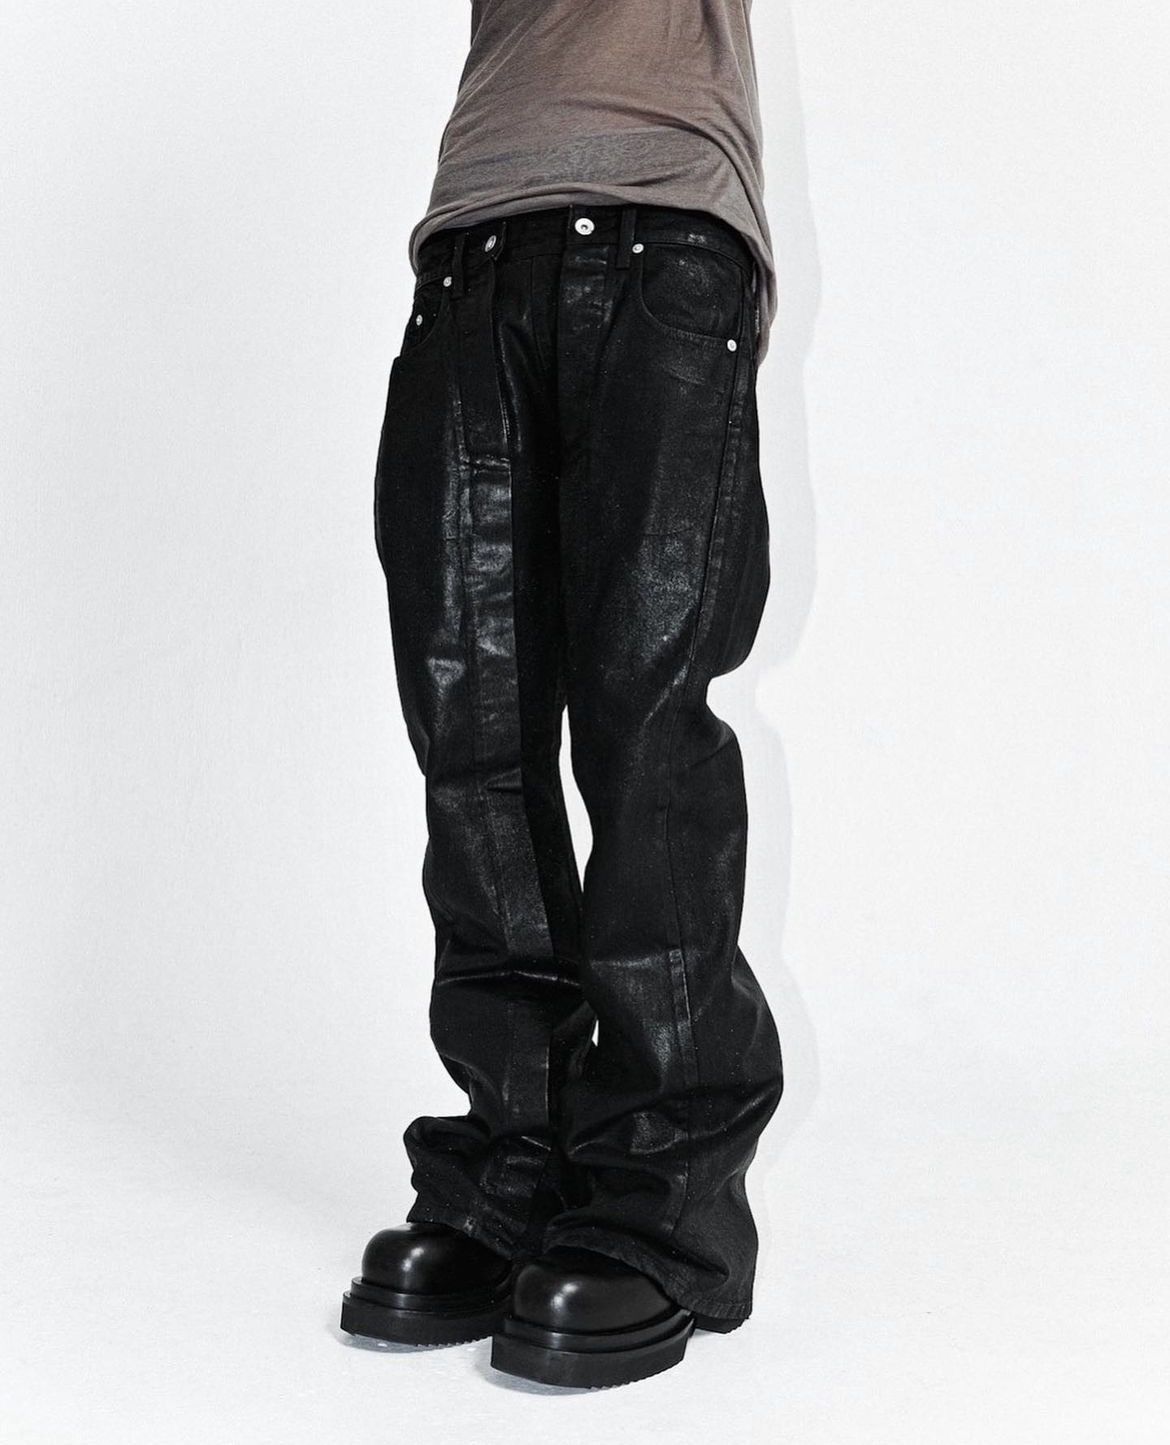 Designer No Mass Prod 02 “GLEAM” Flared Jeans Black Waxed Denim 